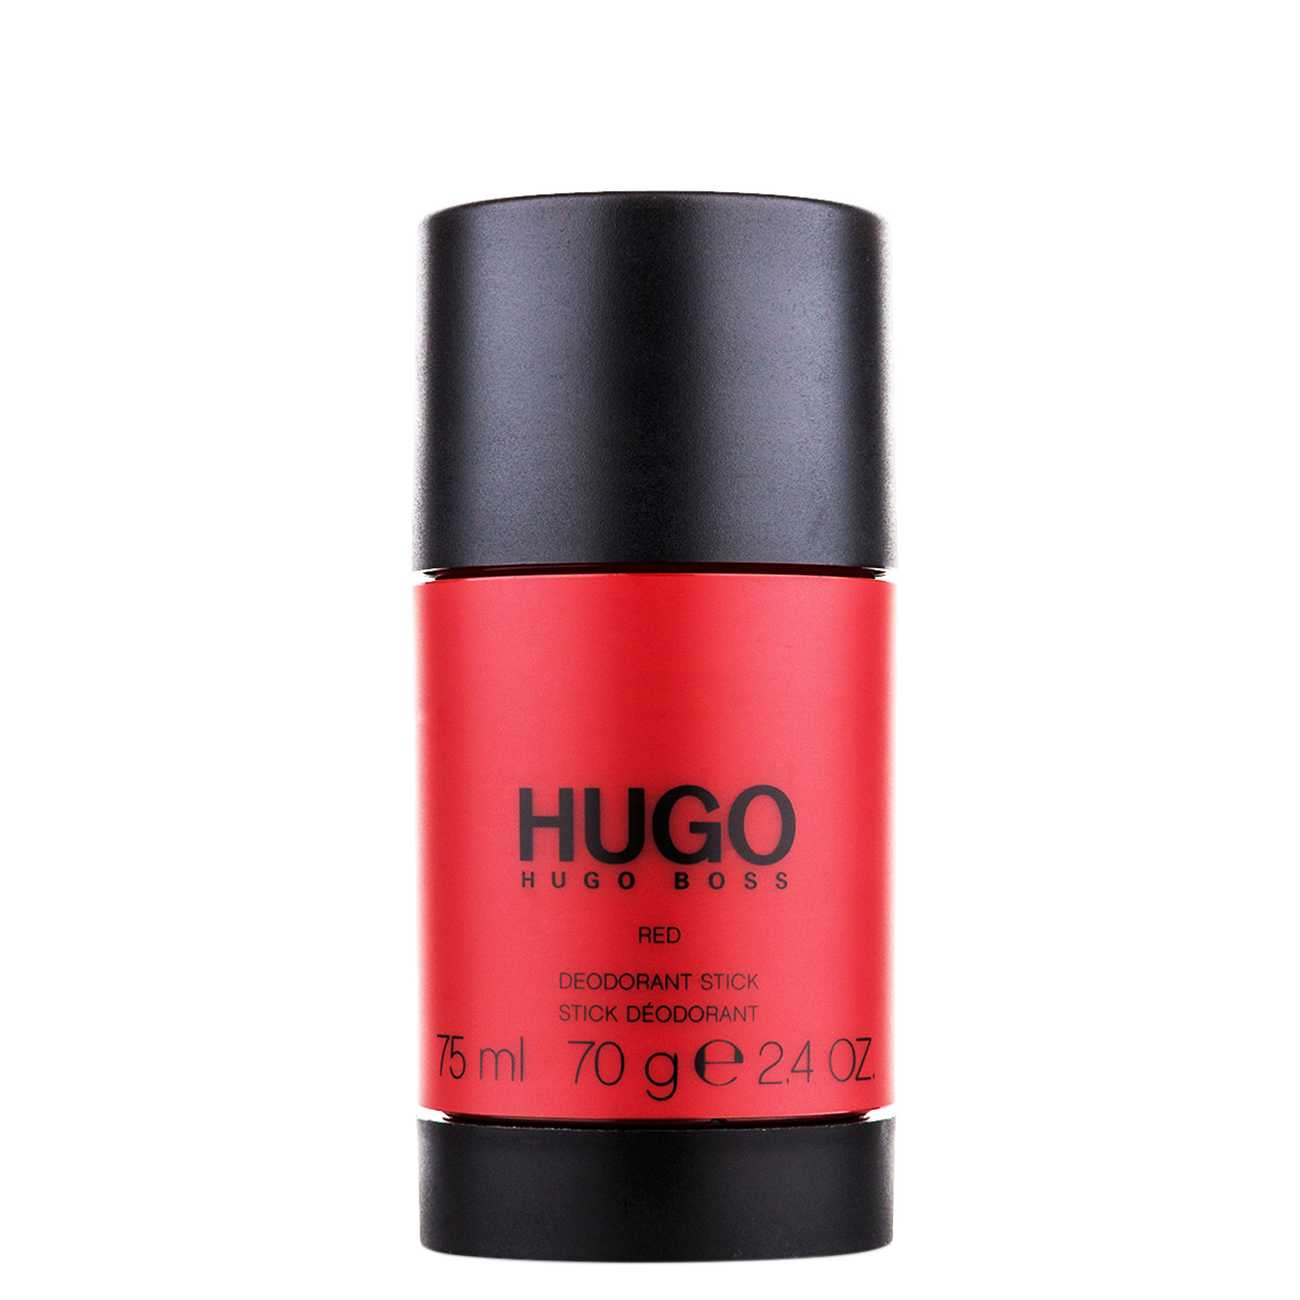 RED DEODORANT STICK original Hugo Boss bestvalue